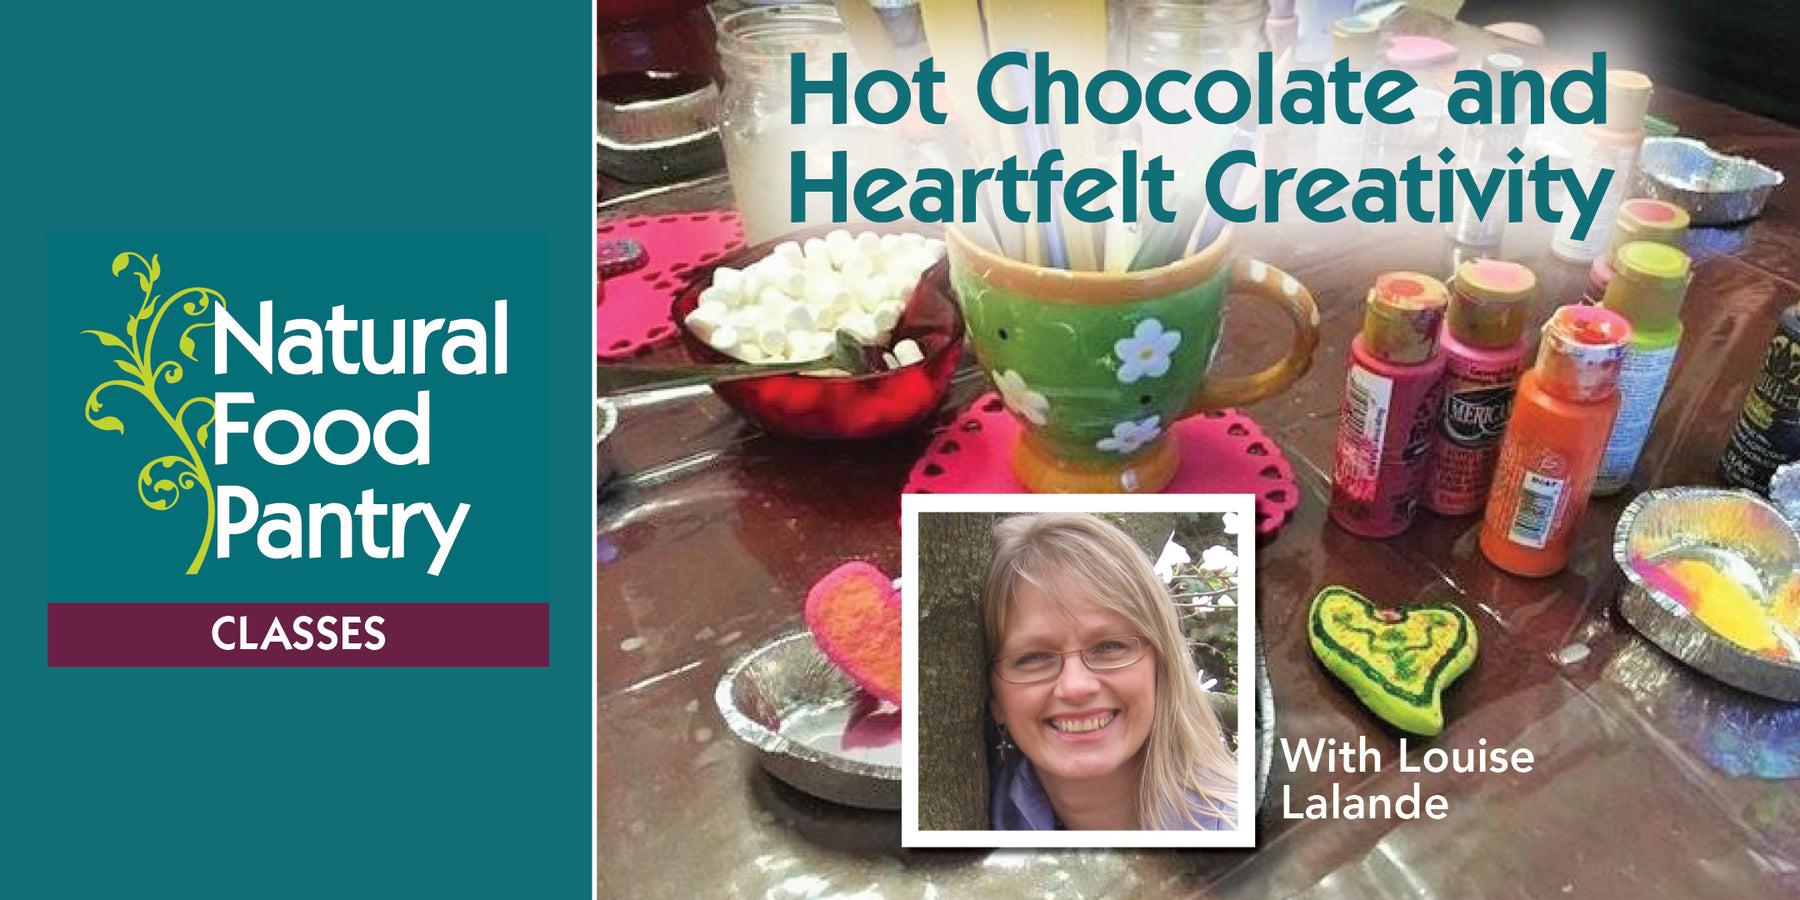 Feb 9: ART CLASS - Hot Chocolate and Heartfelt Creativity